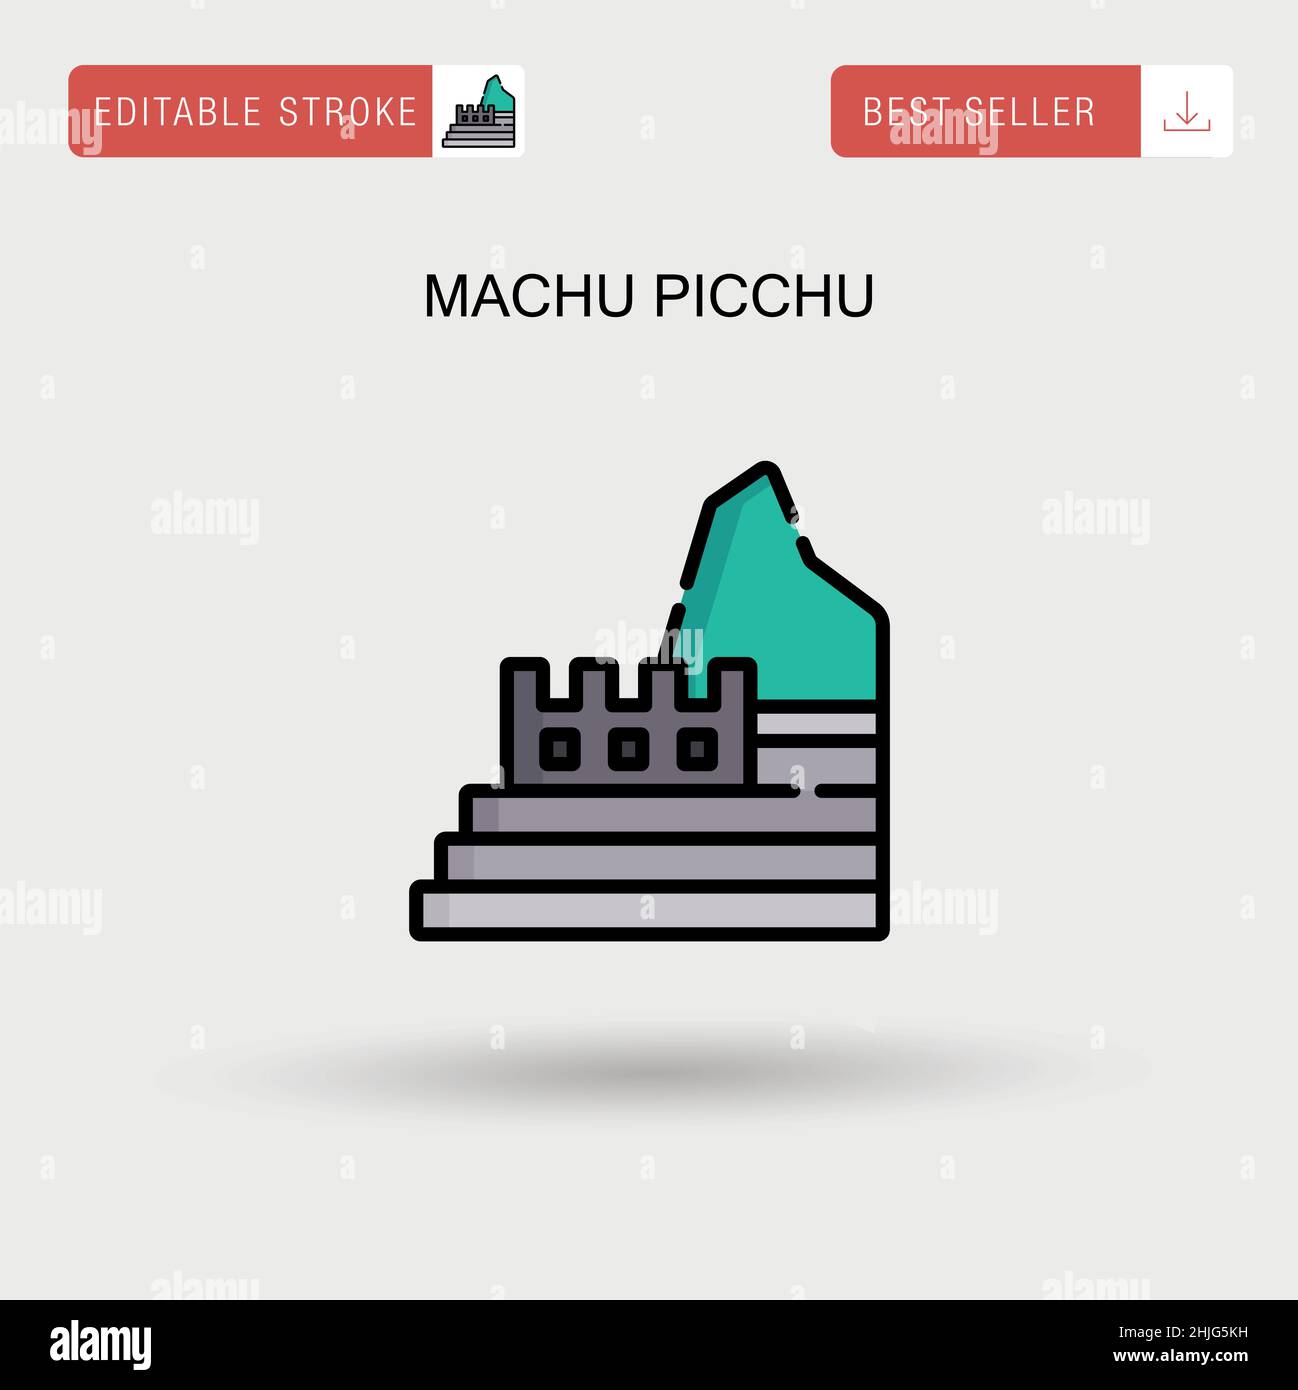 Machu picchu Simple vector icon. Stock Vector